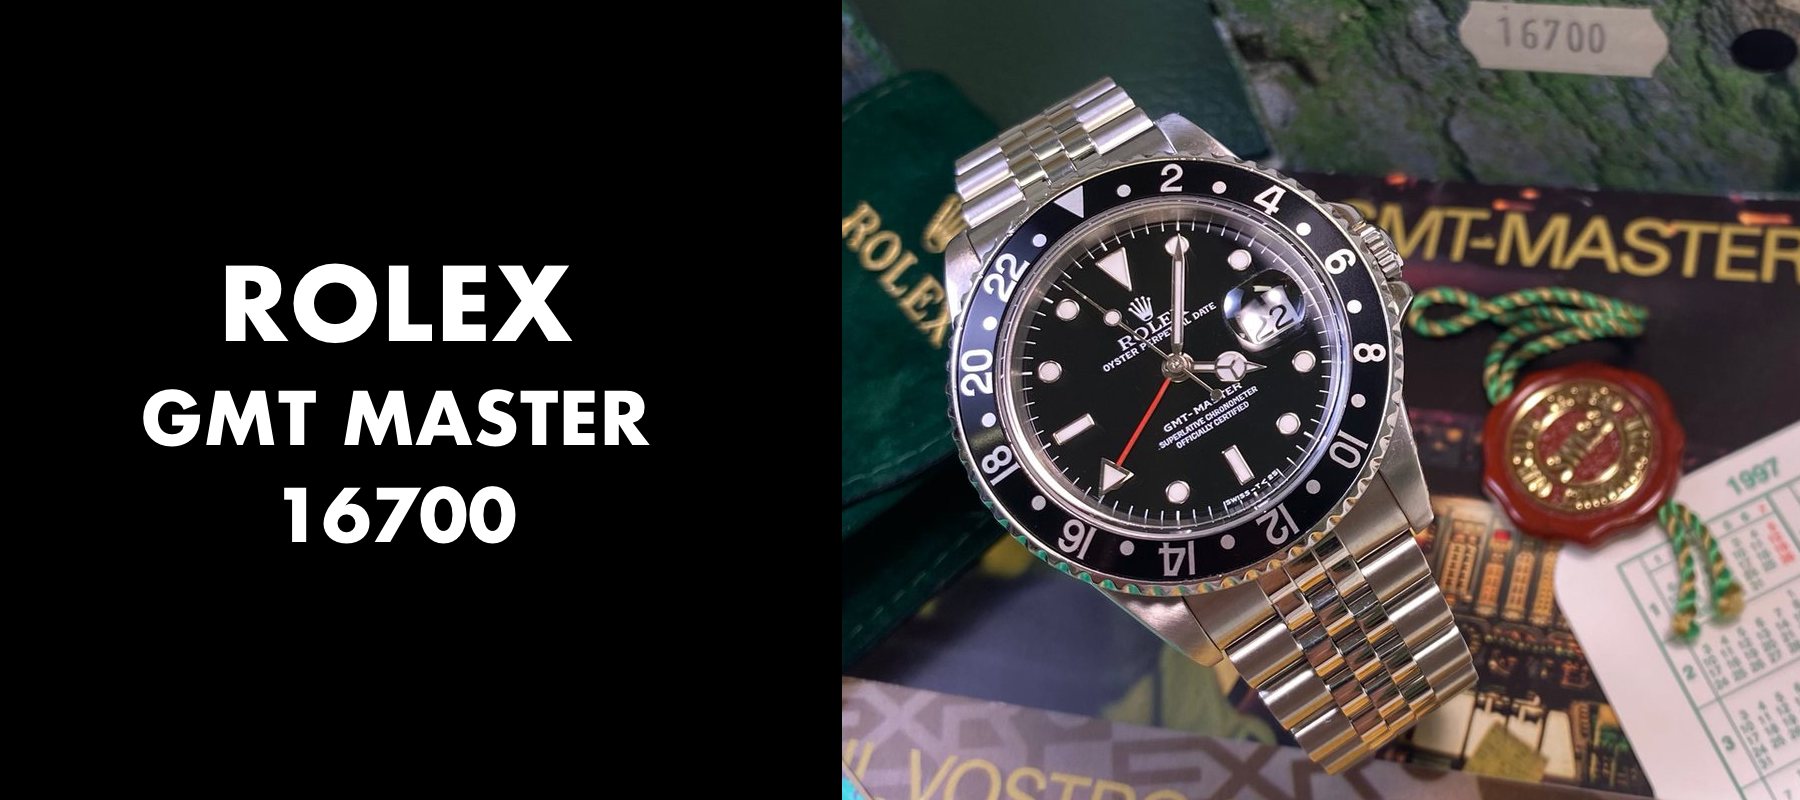 Rolex GMT Master 16700 - History